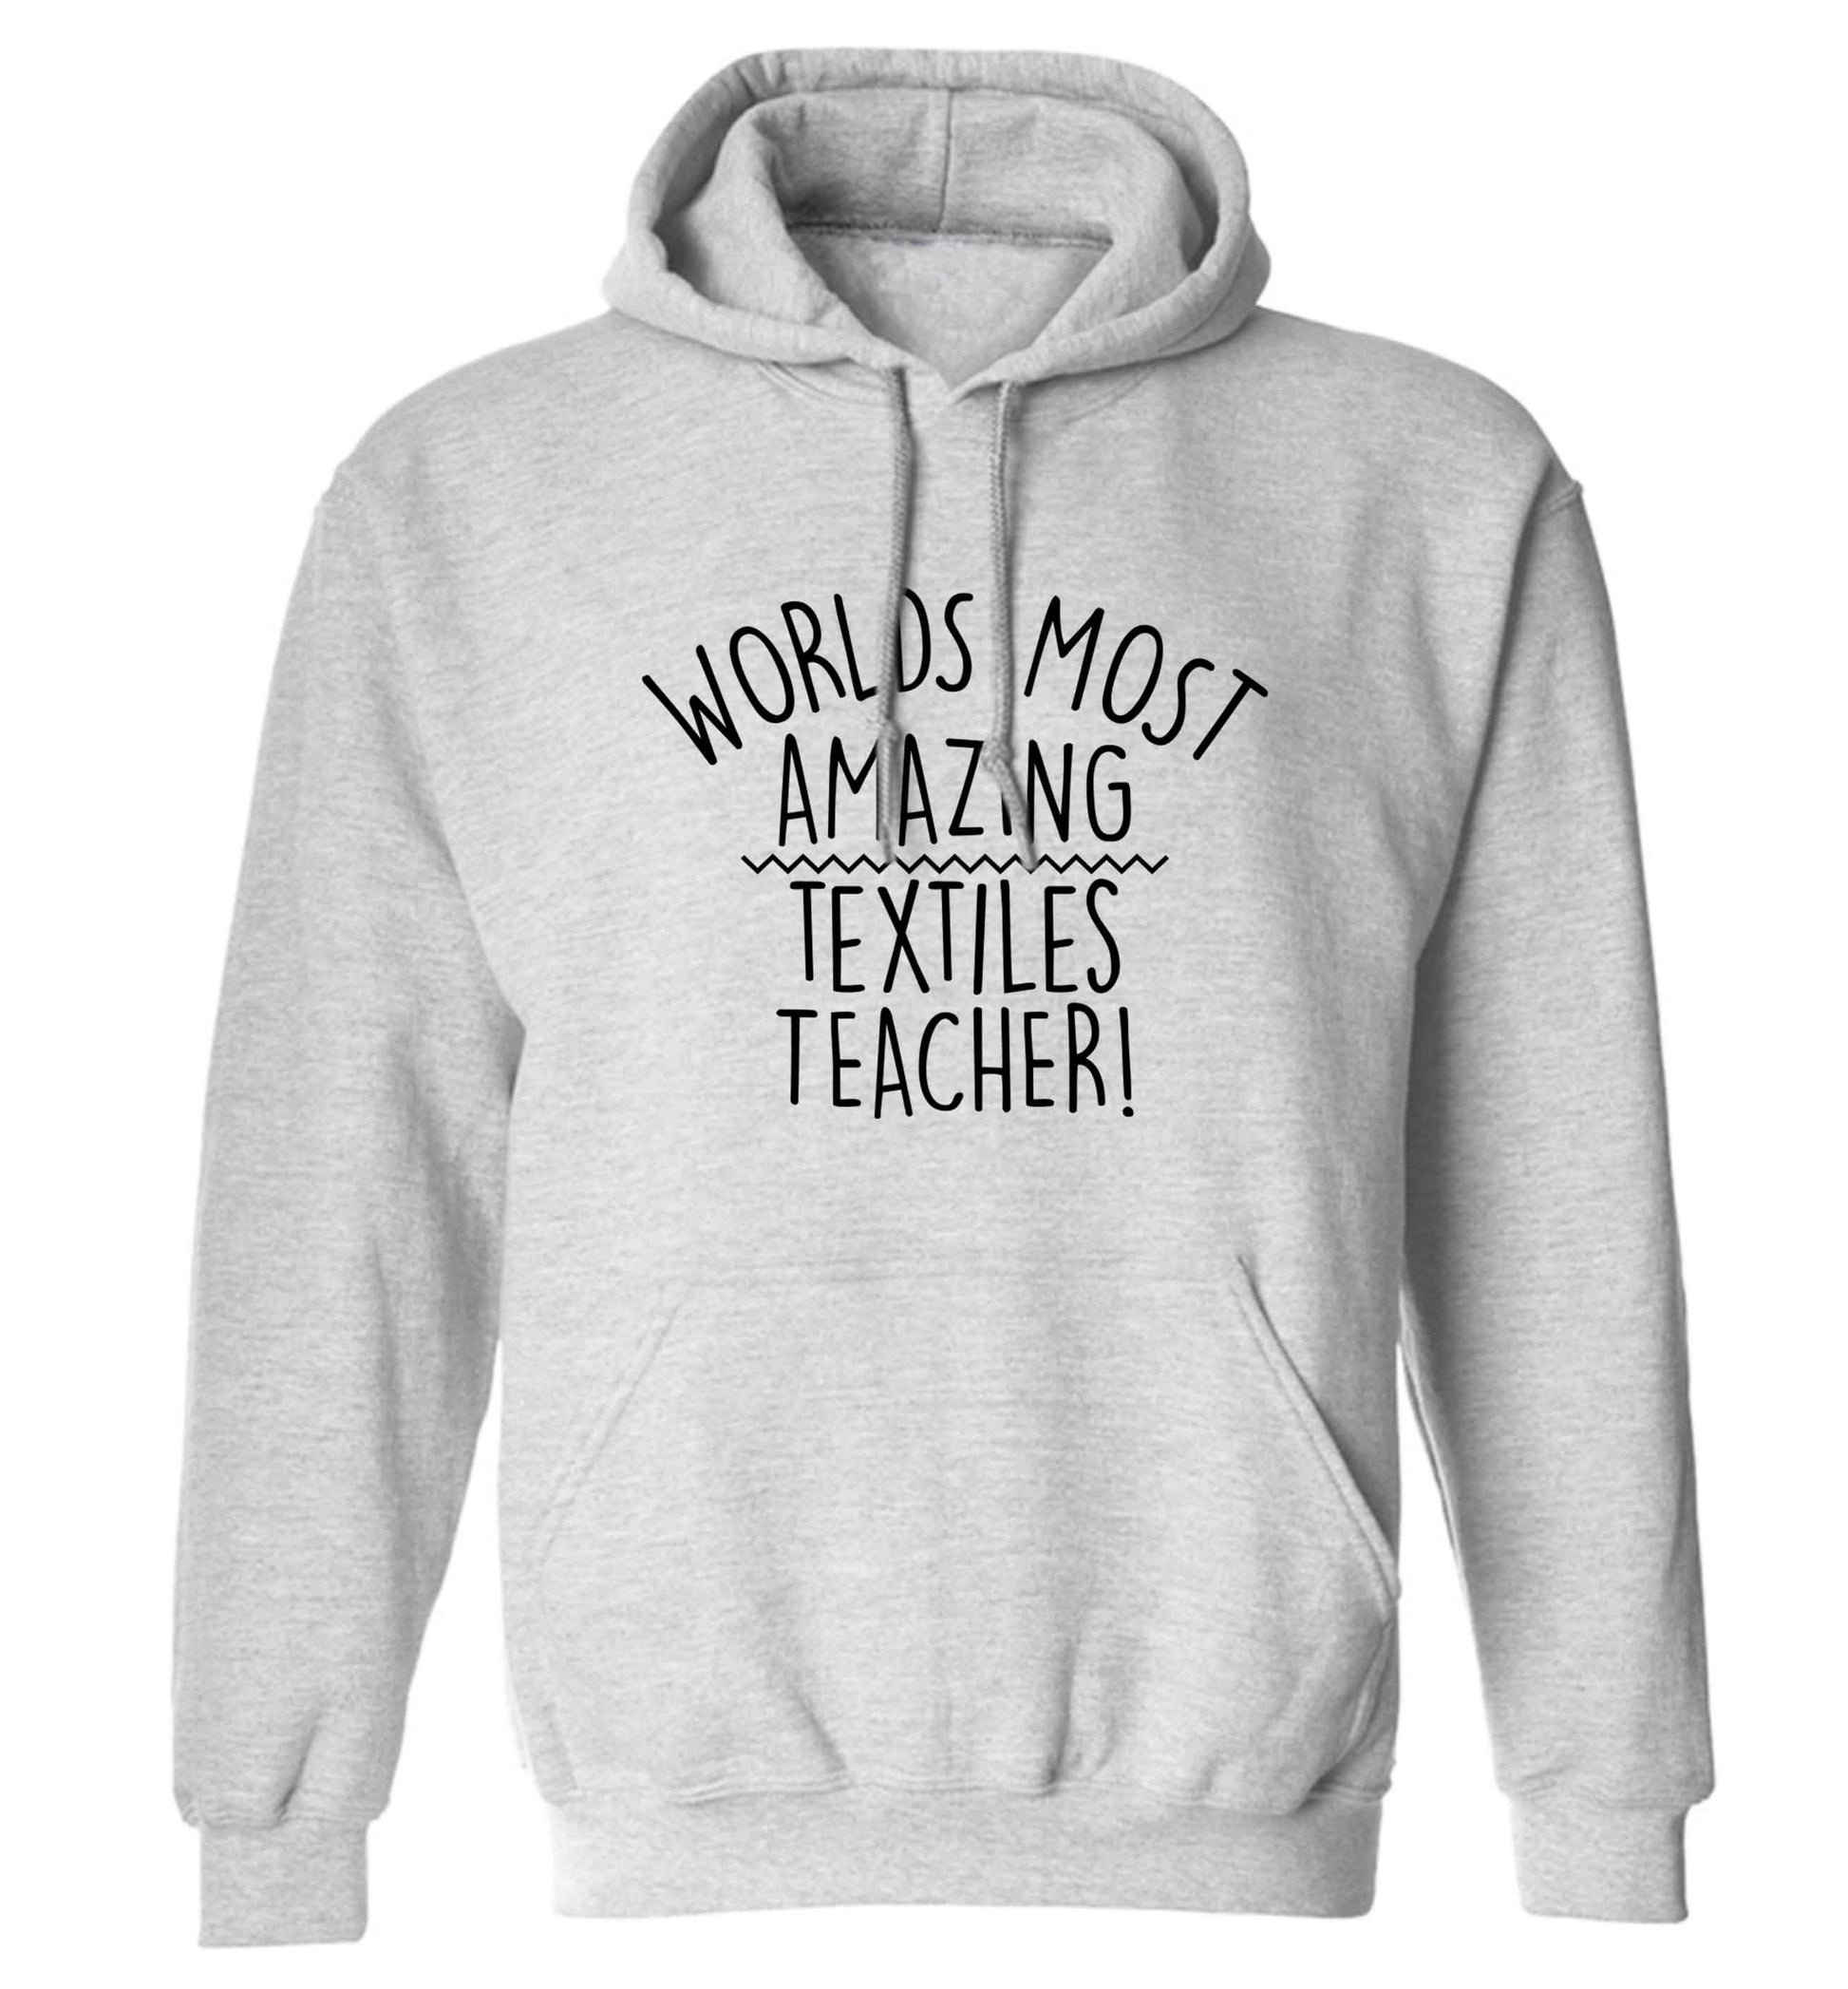 Worlds most amazing textiles teacher adults unisex grey hoodie 2XL